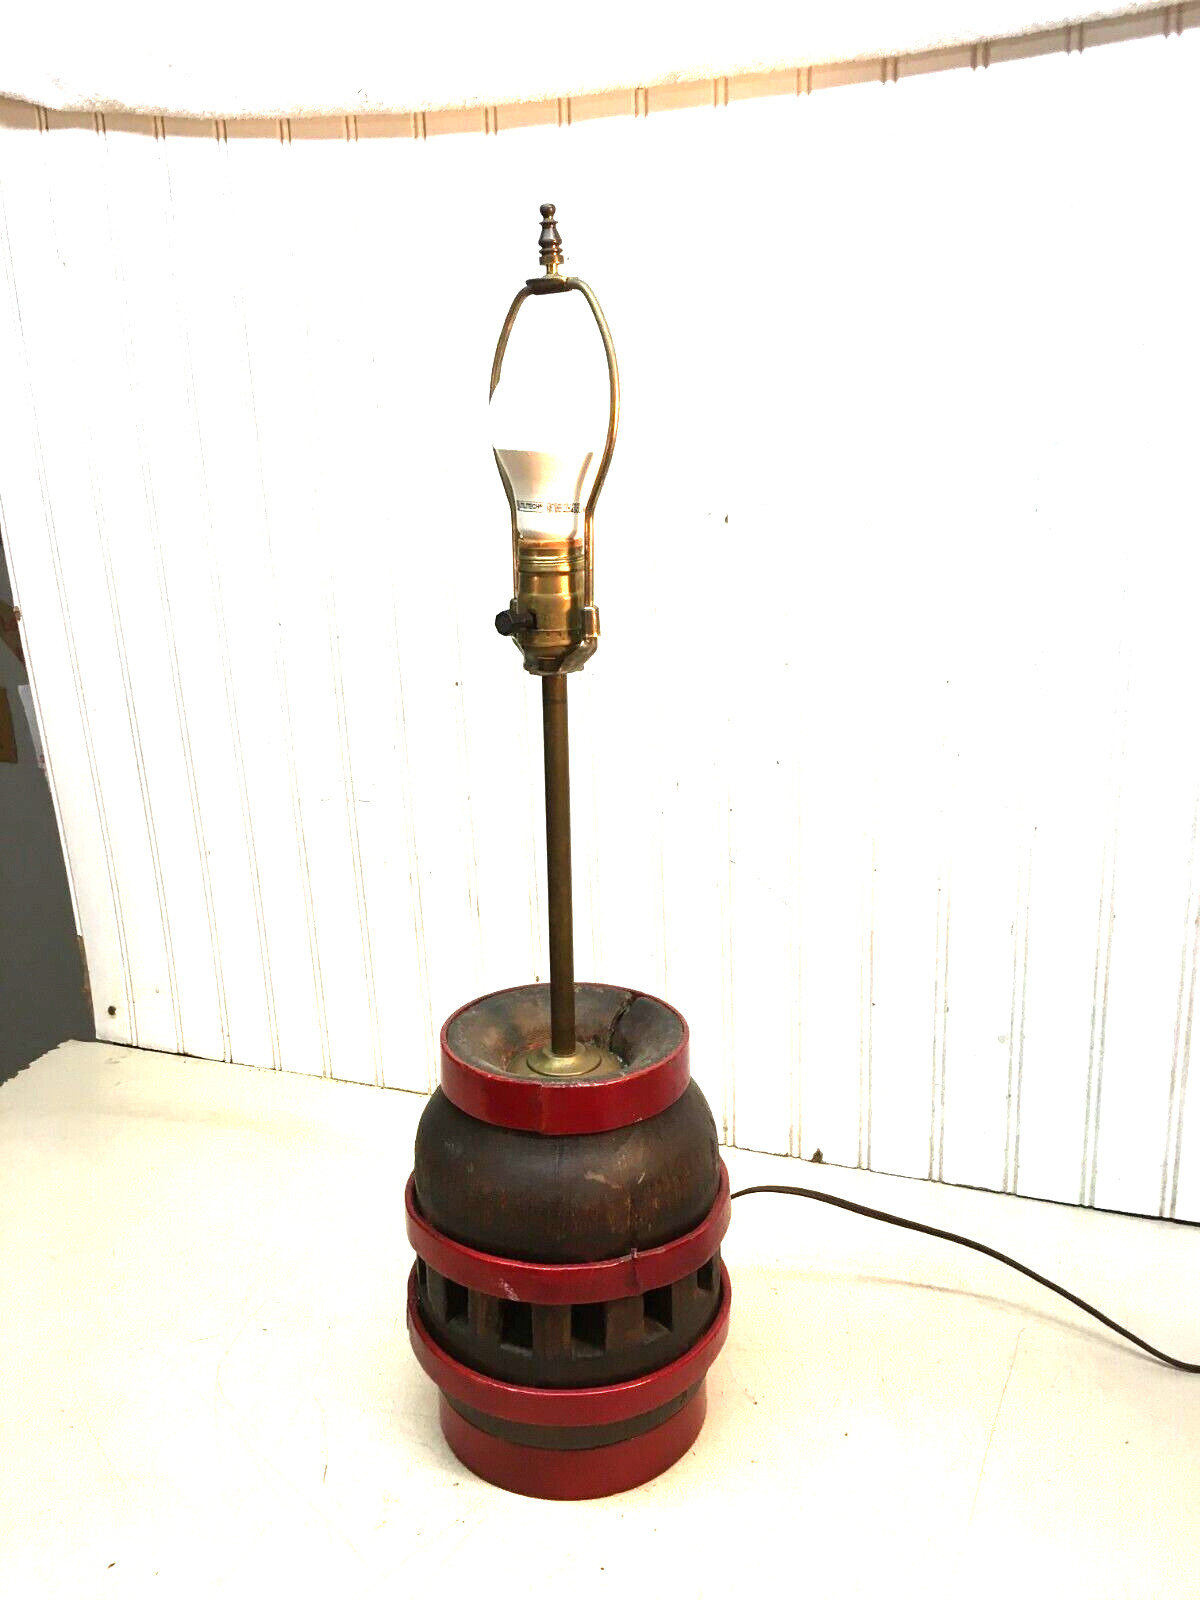 Antique WAGON WHEEL HUB Table Lamp 13 Spoked Hub Western Cabin Lighting